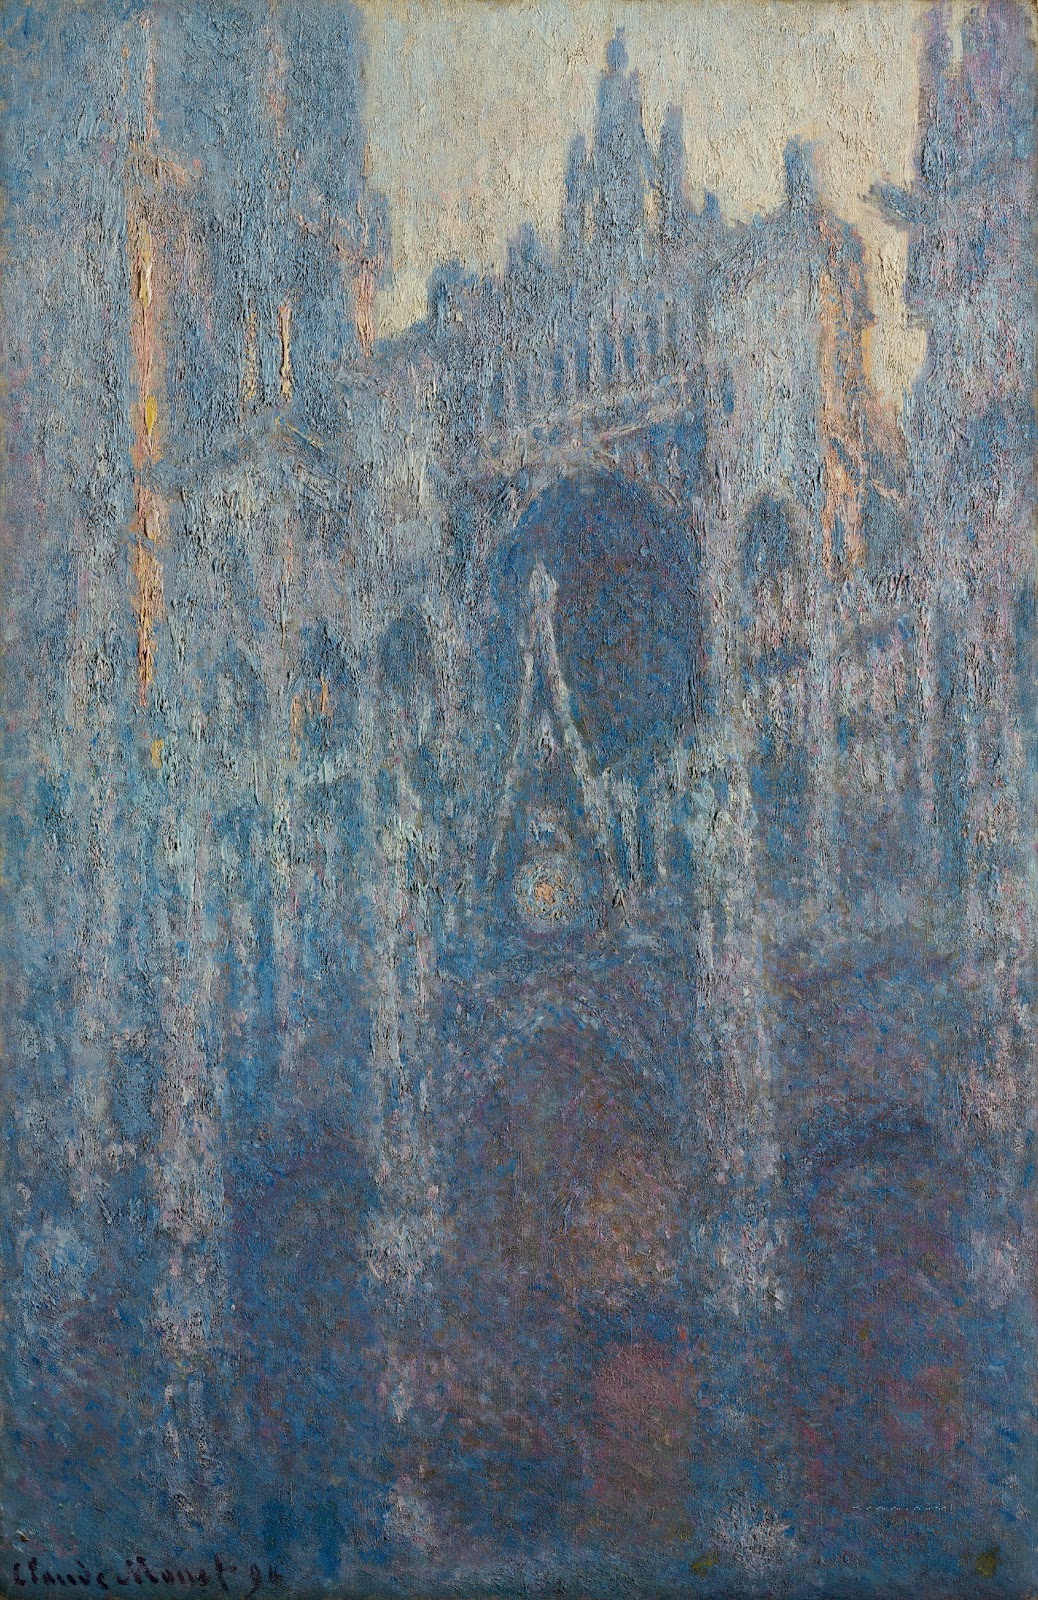 Claude+Monet-1840-1926 (591).jpg